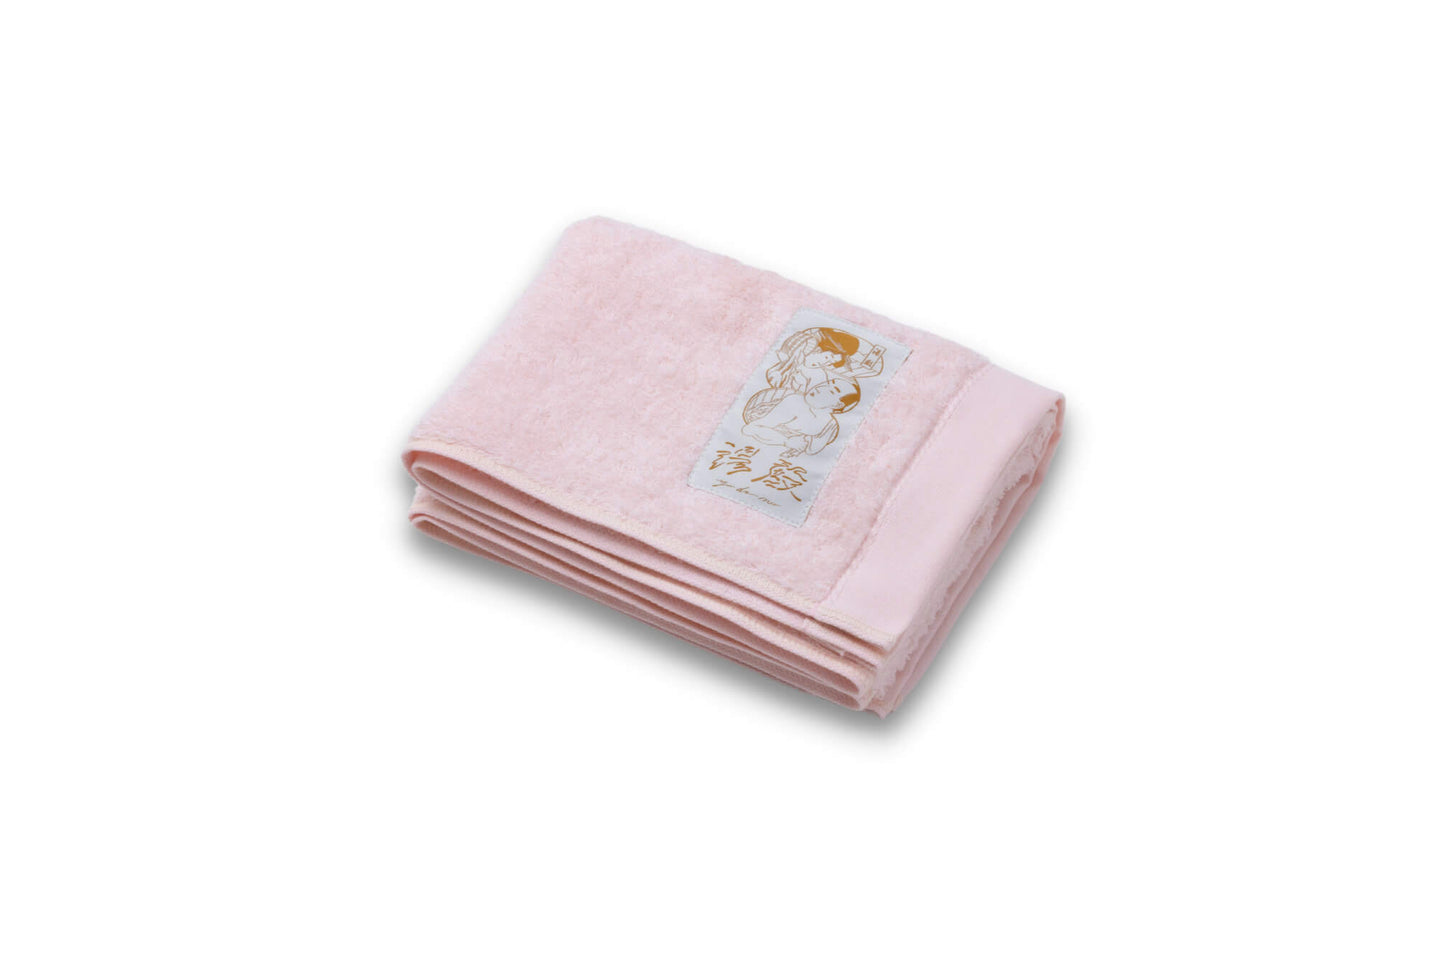 Japarcana Japanese Bath Towel- color pink